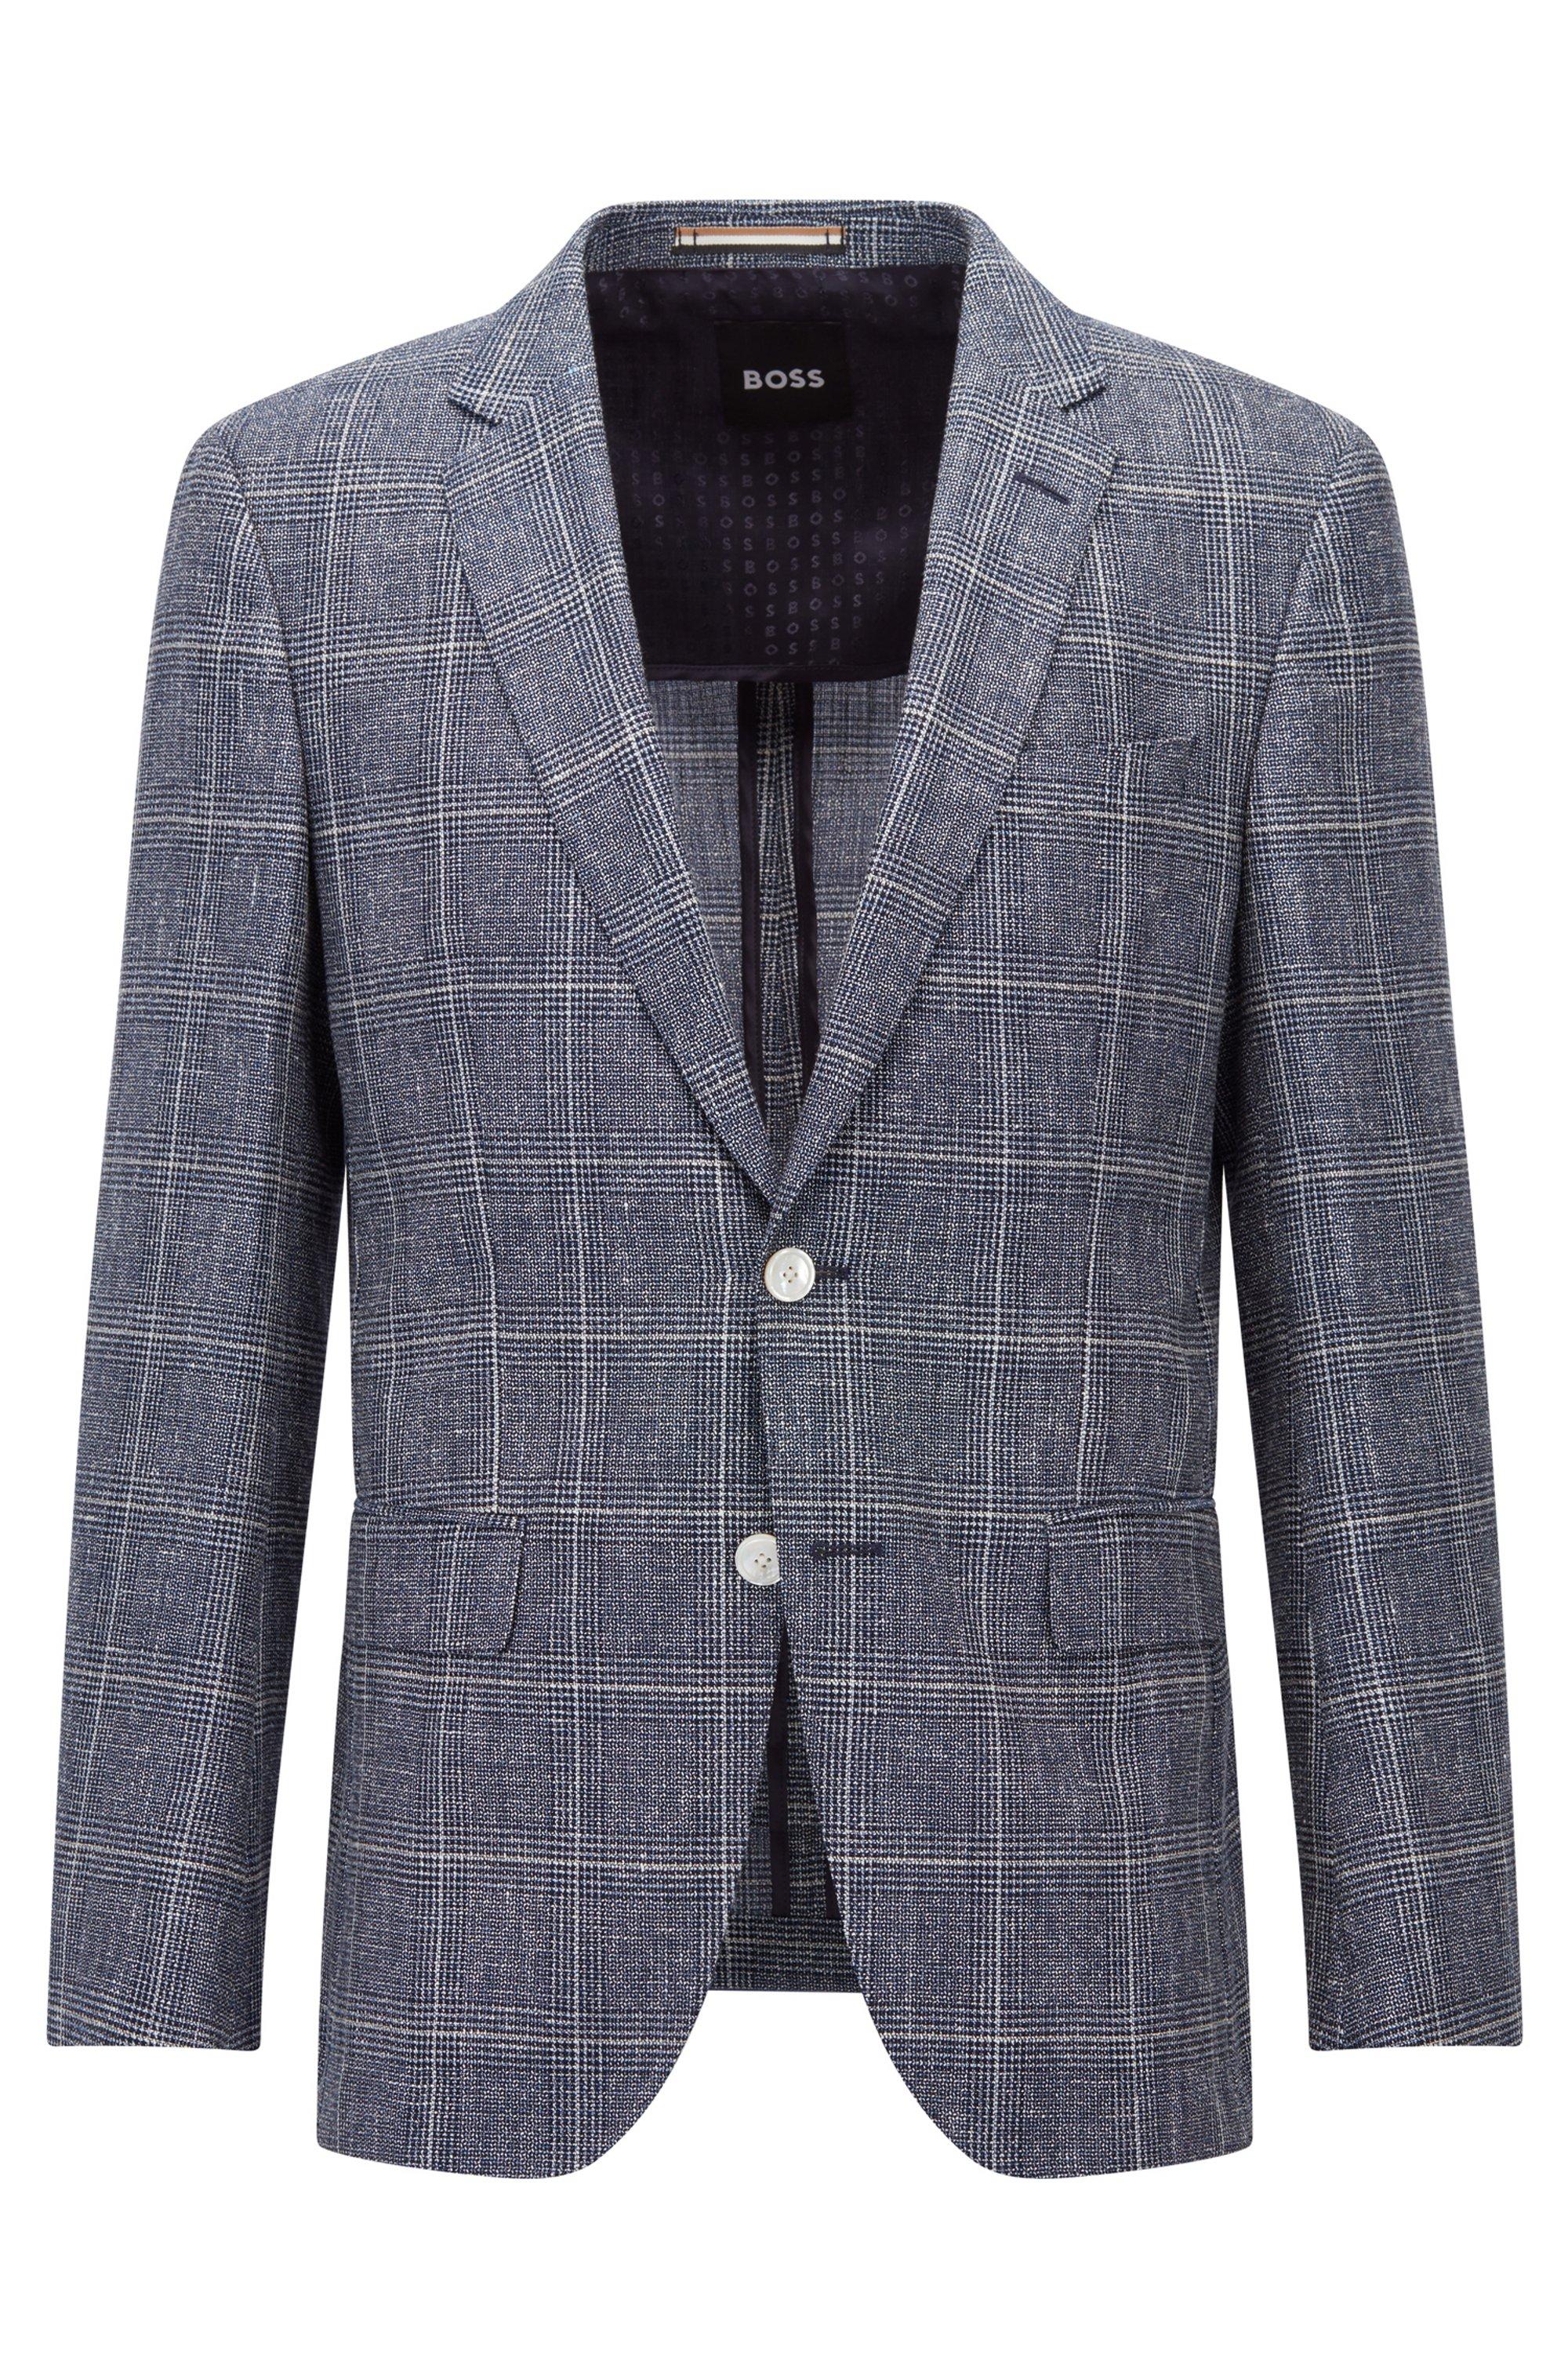 BOSS by HUGO BOSS Slim-fit Jacket In A Checked Wool-linen Blend in Blue for  Men | Lyst